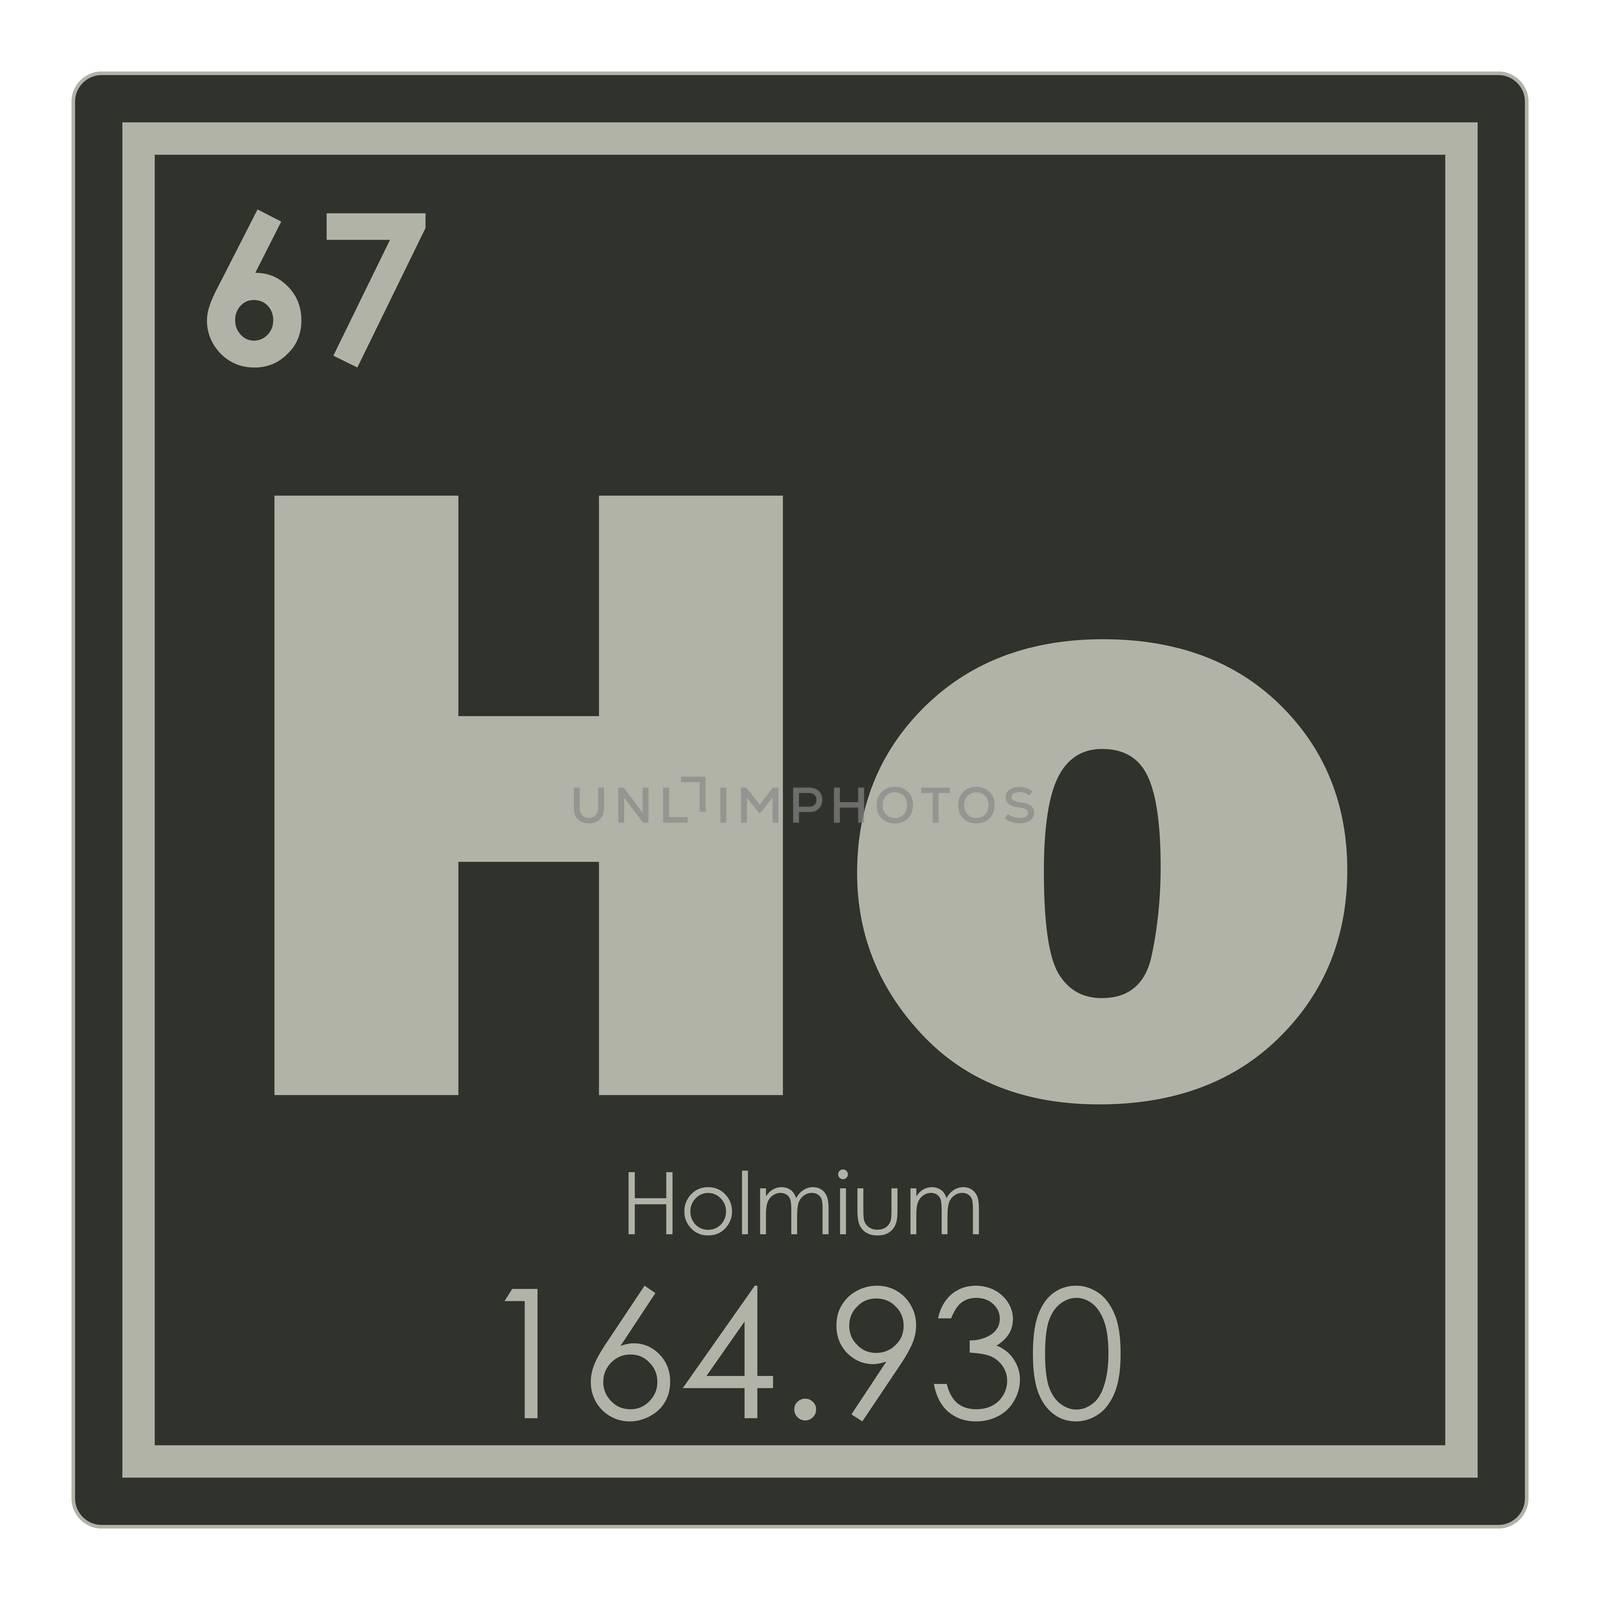 Holmium chemical element by tony4urban